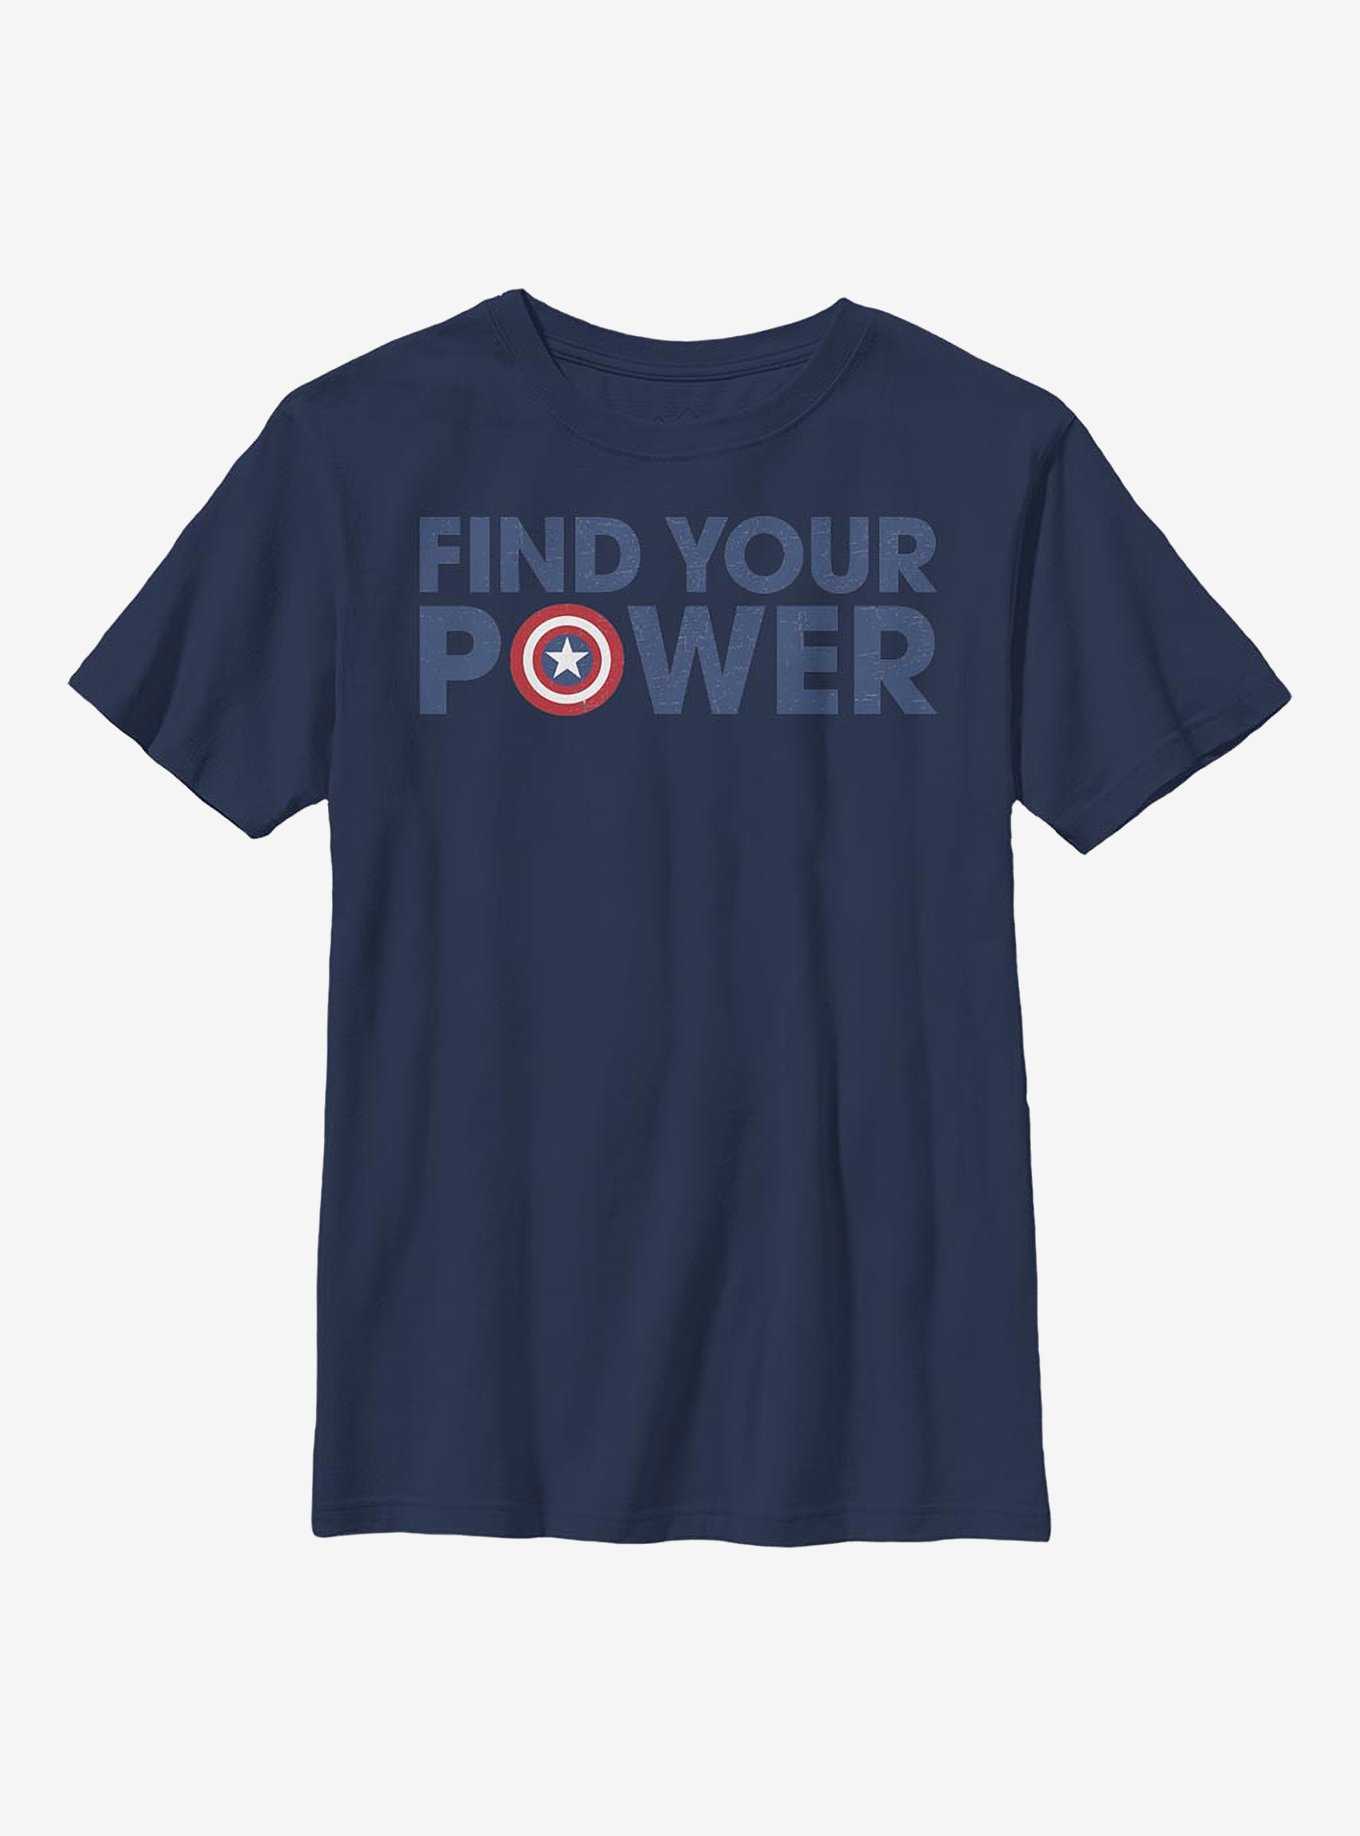 Marvel Captain America Shield Power Youth T-Shirt, , hi-res